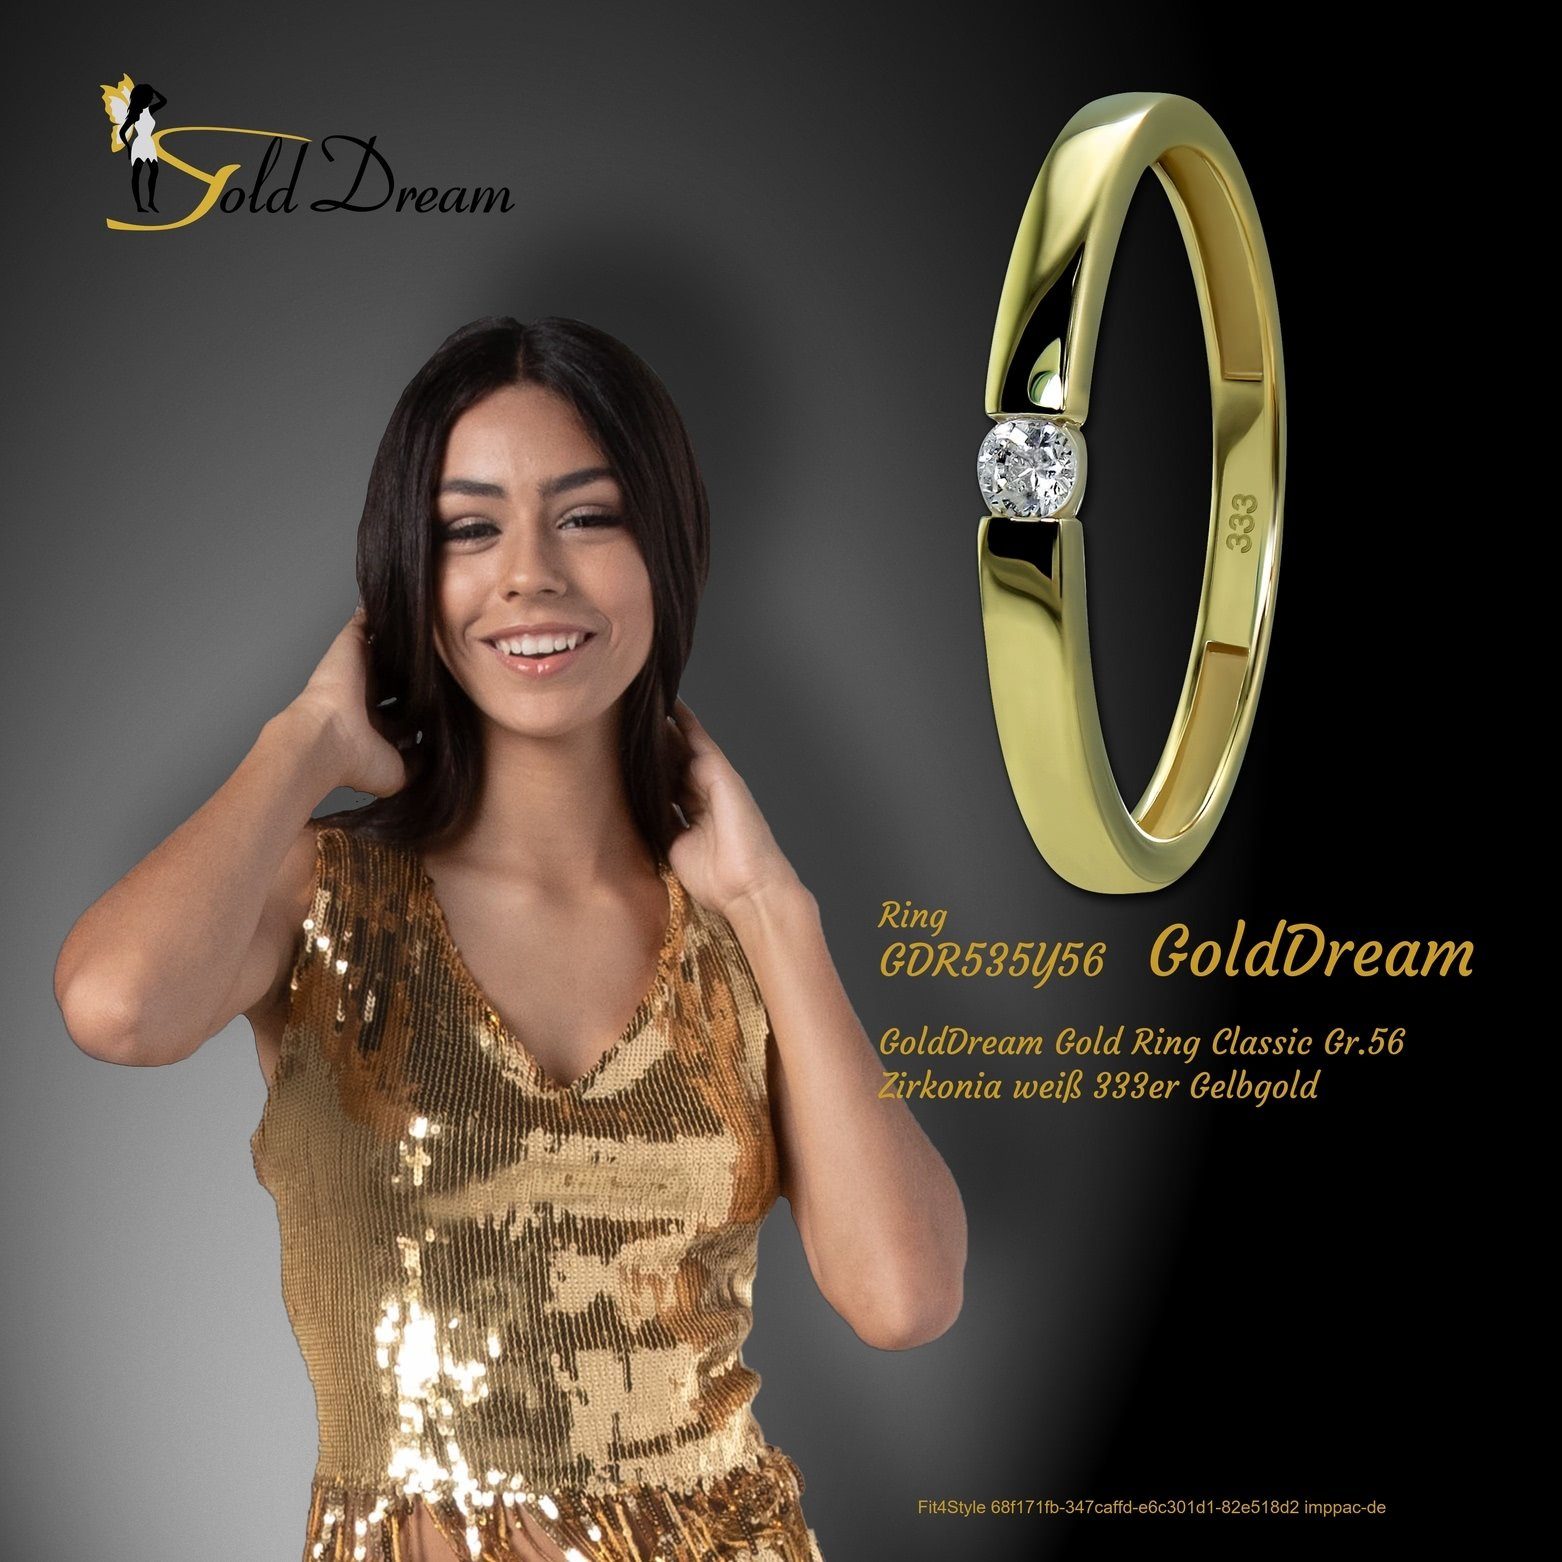 weiß 8 GoldDream GoldDream 333 Goldring gold, Ring (Fingerring), - Damen Gelbgold Classic Classic Ring Gold Gr.56 Farbe: Karat,